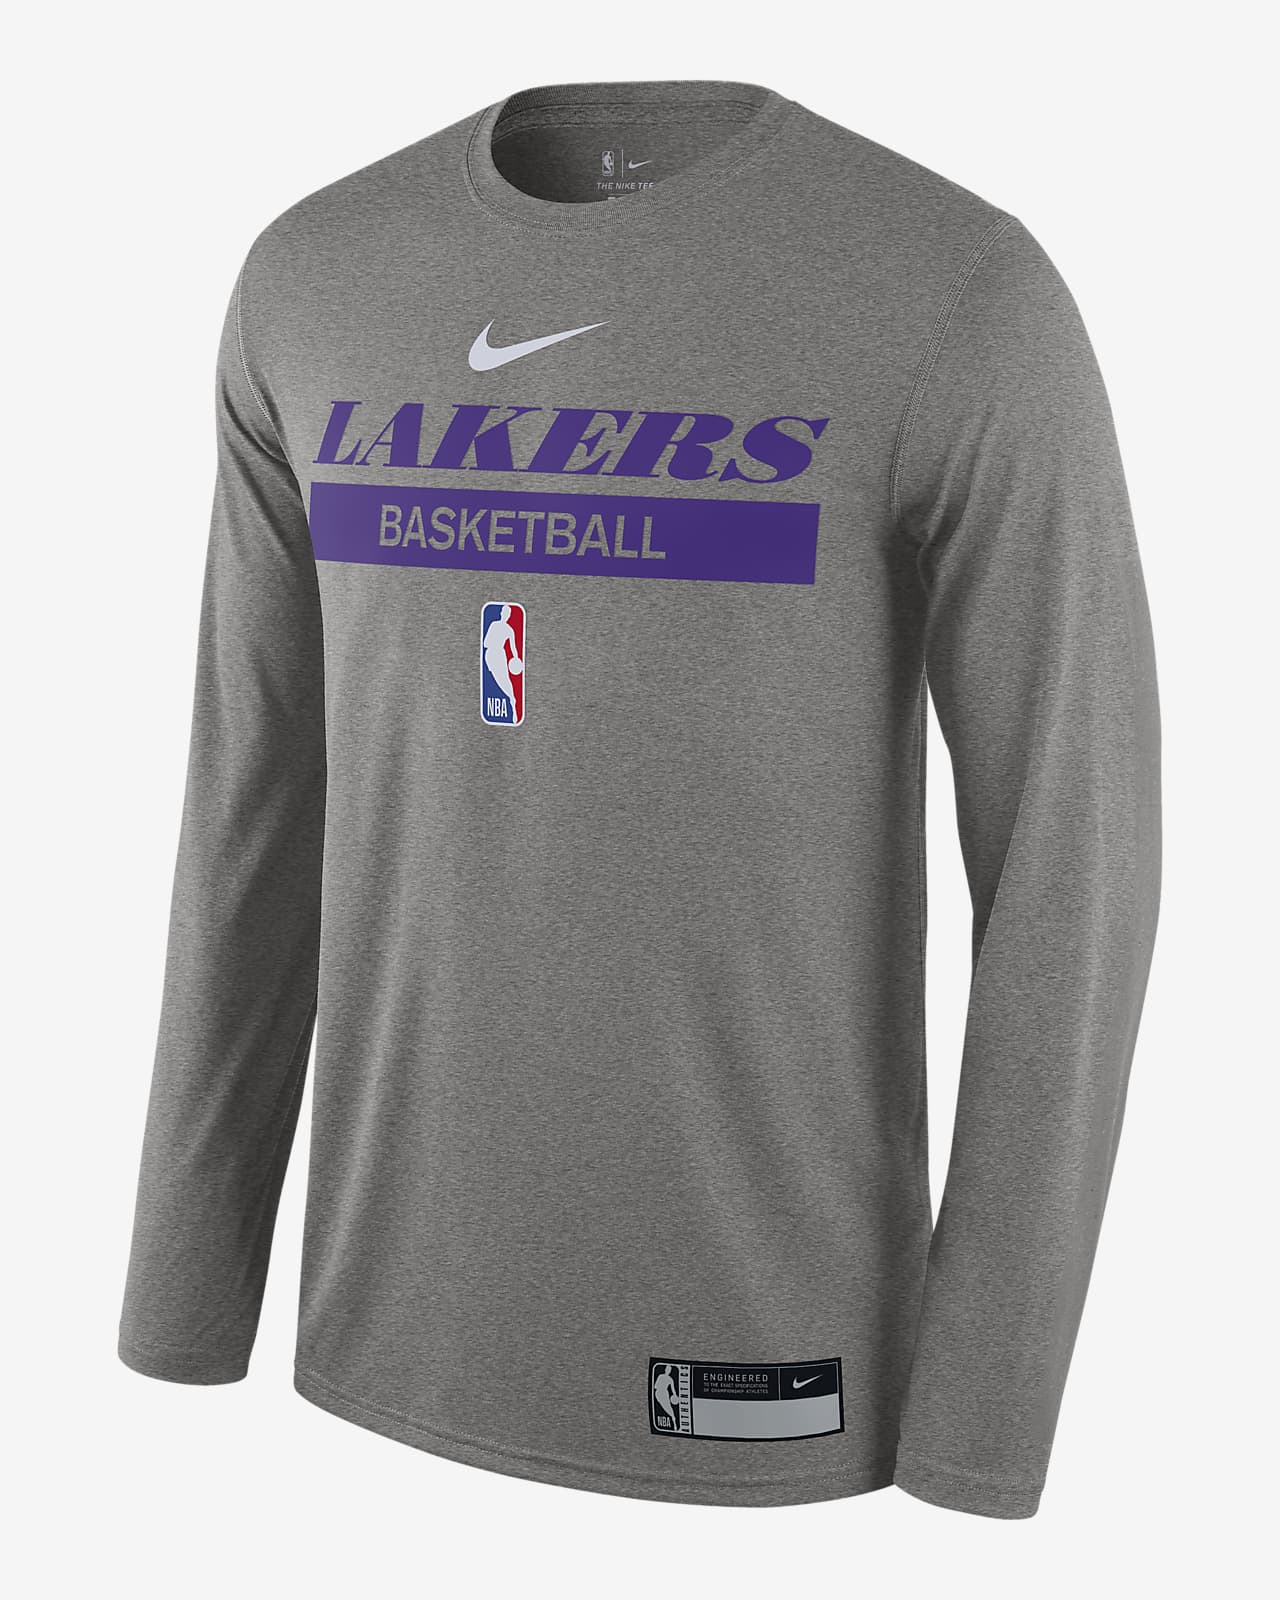 Lakers Men's Dri-FIT NBA Practice Long-Sleeve T-Shirt. Nike .com